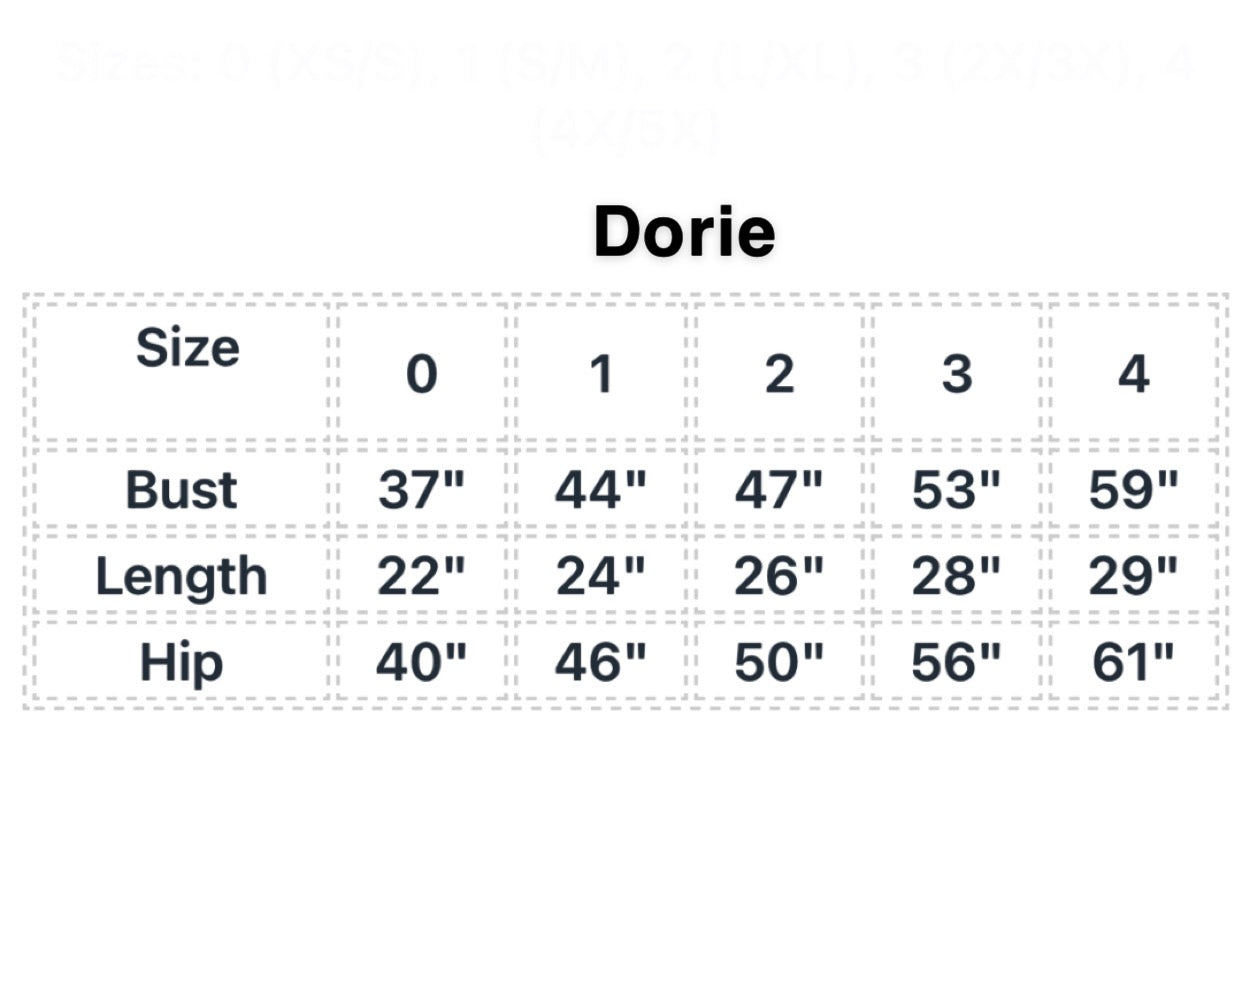 Dorie Top- Perfect Fit Guaranteed!